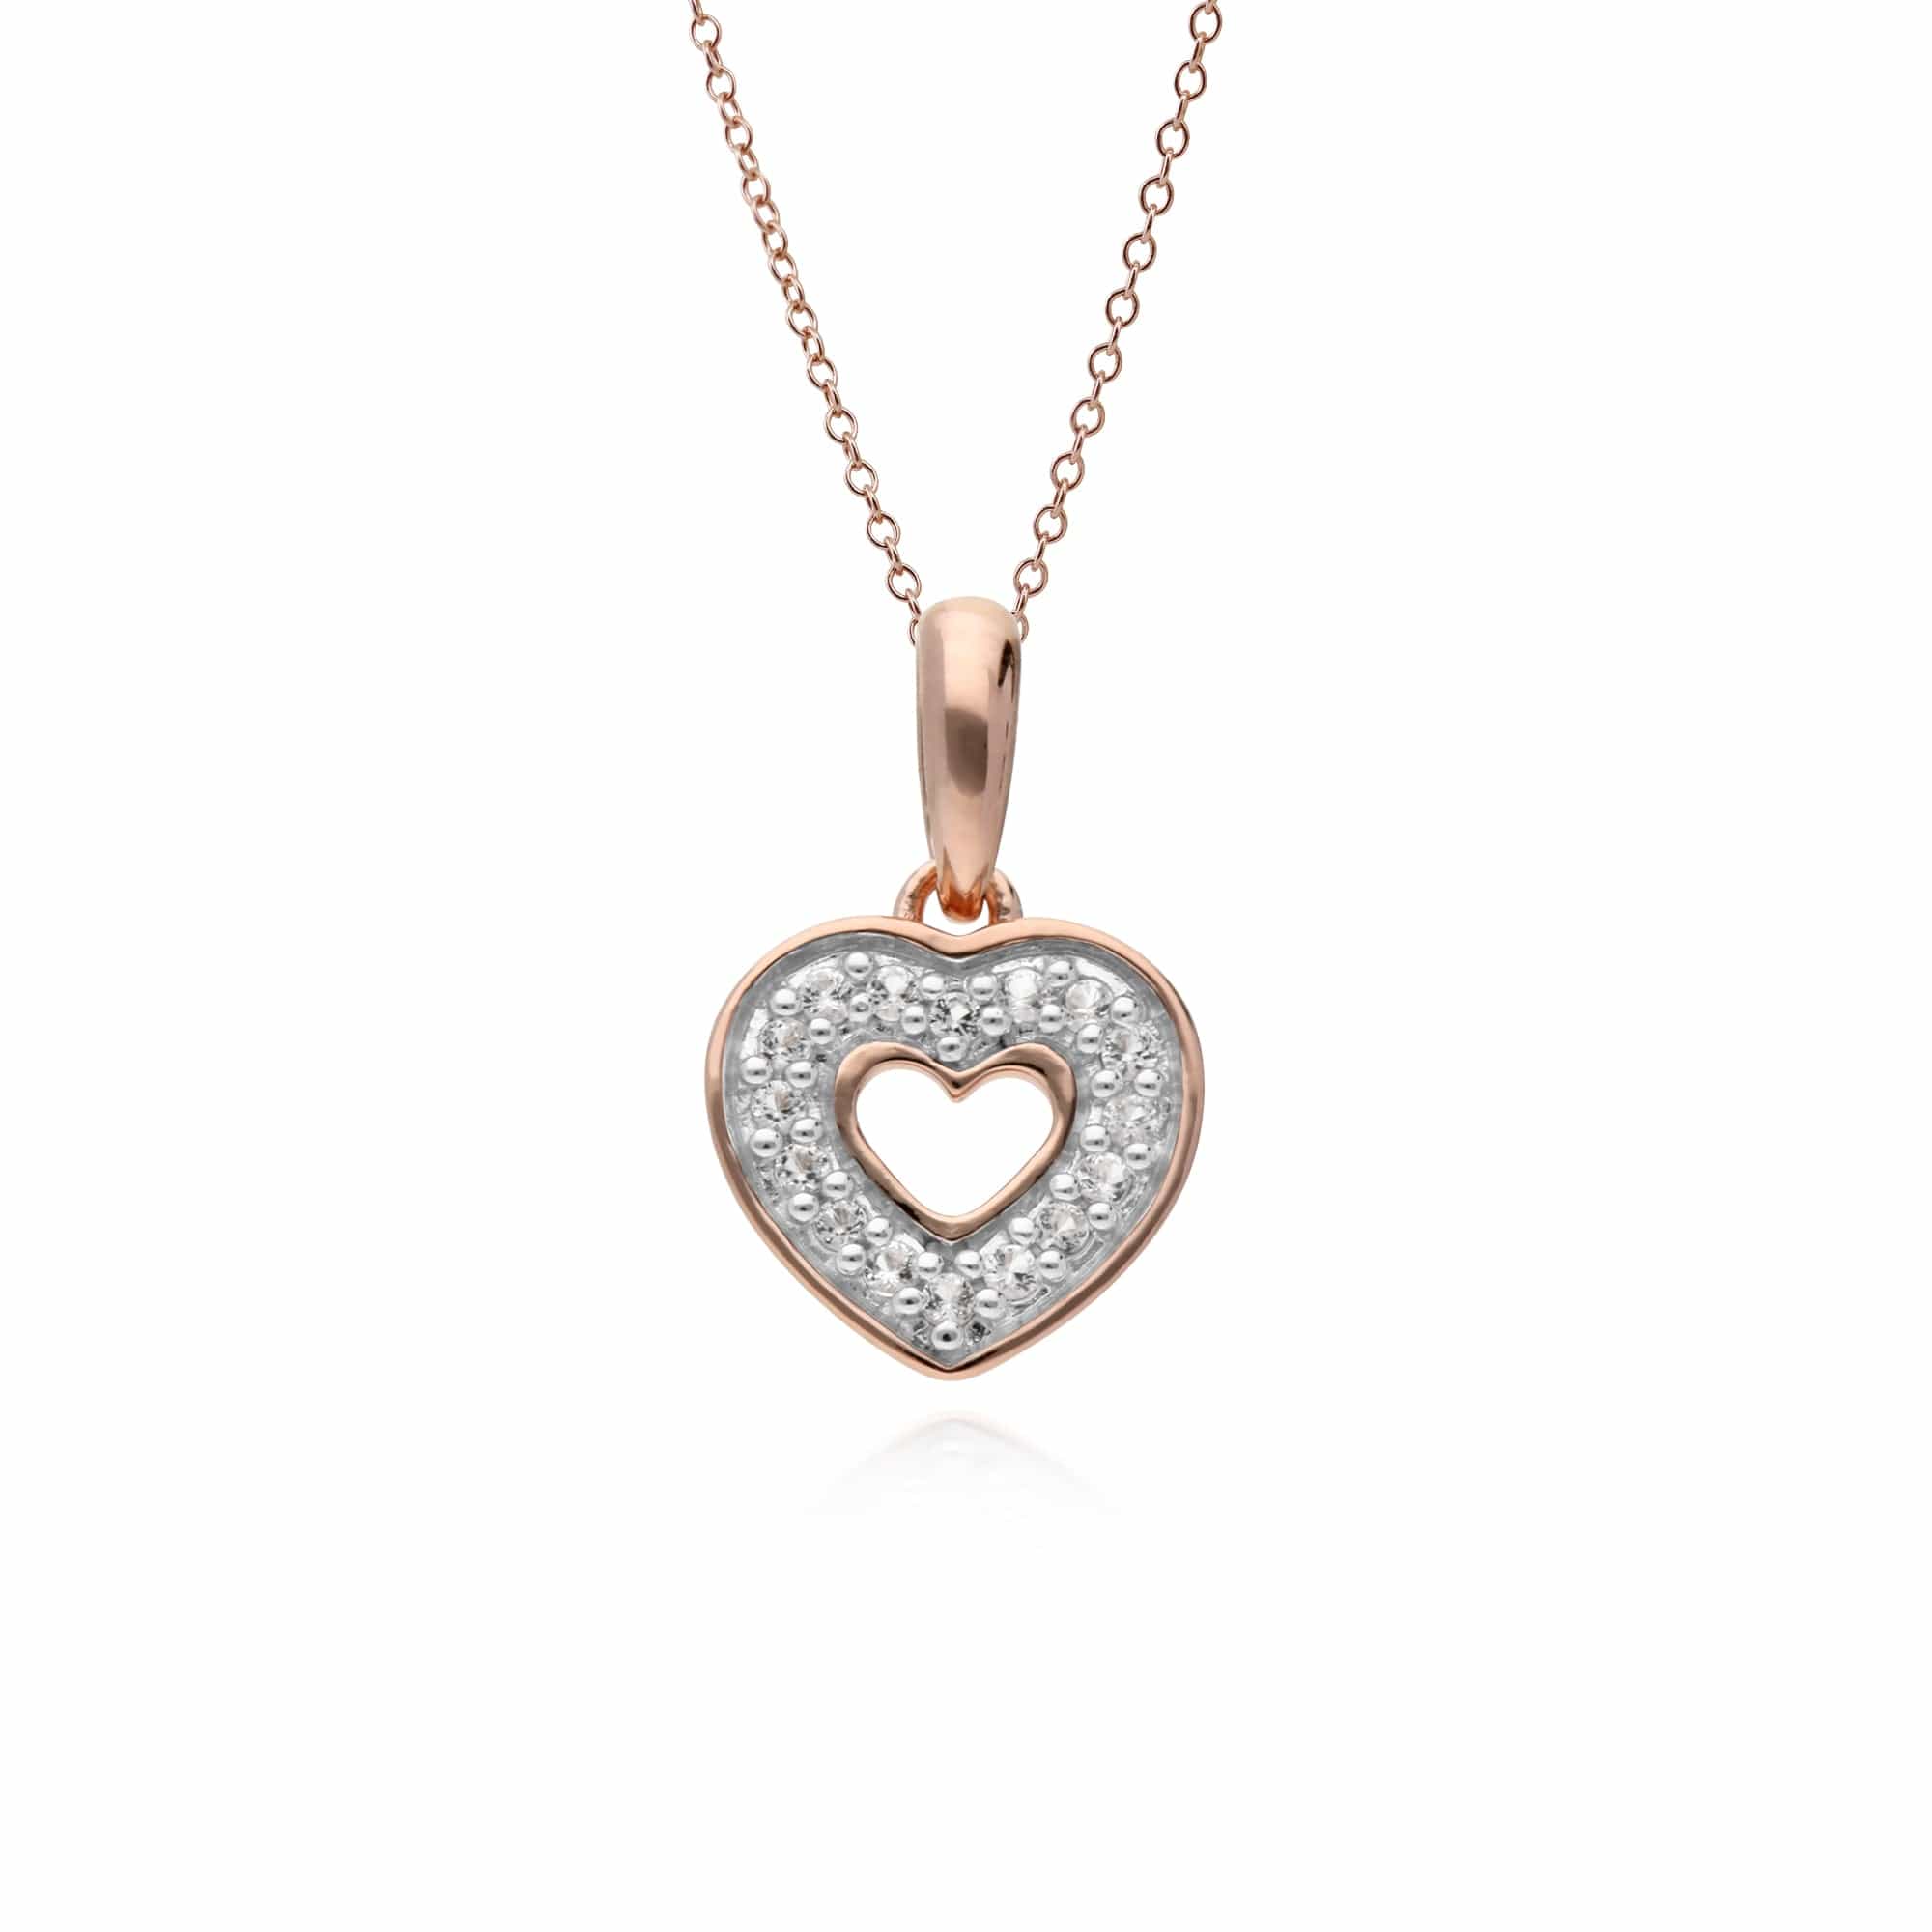 Photos - Pendant / Choker Necklace Gemondo Rose Gold Plated Sterling Silver Topaz Heart Pendant